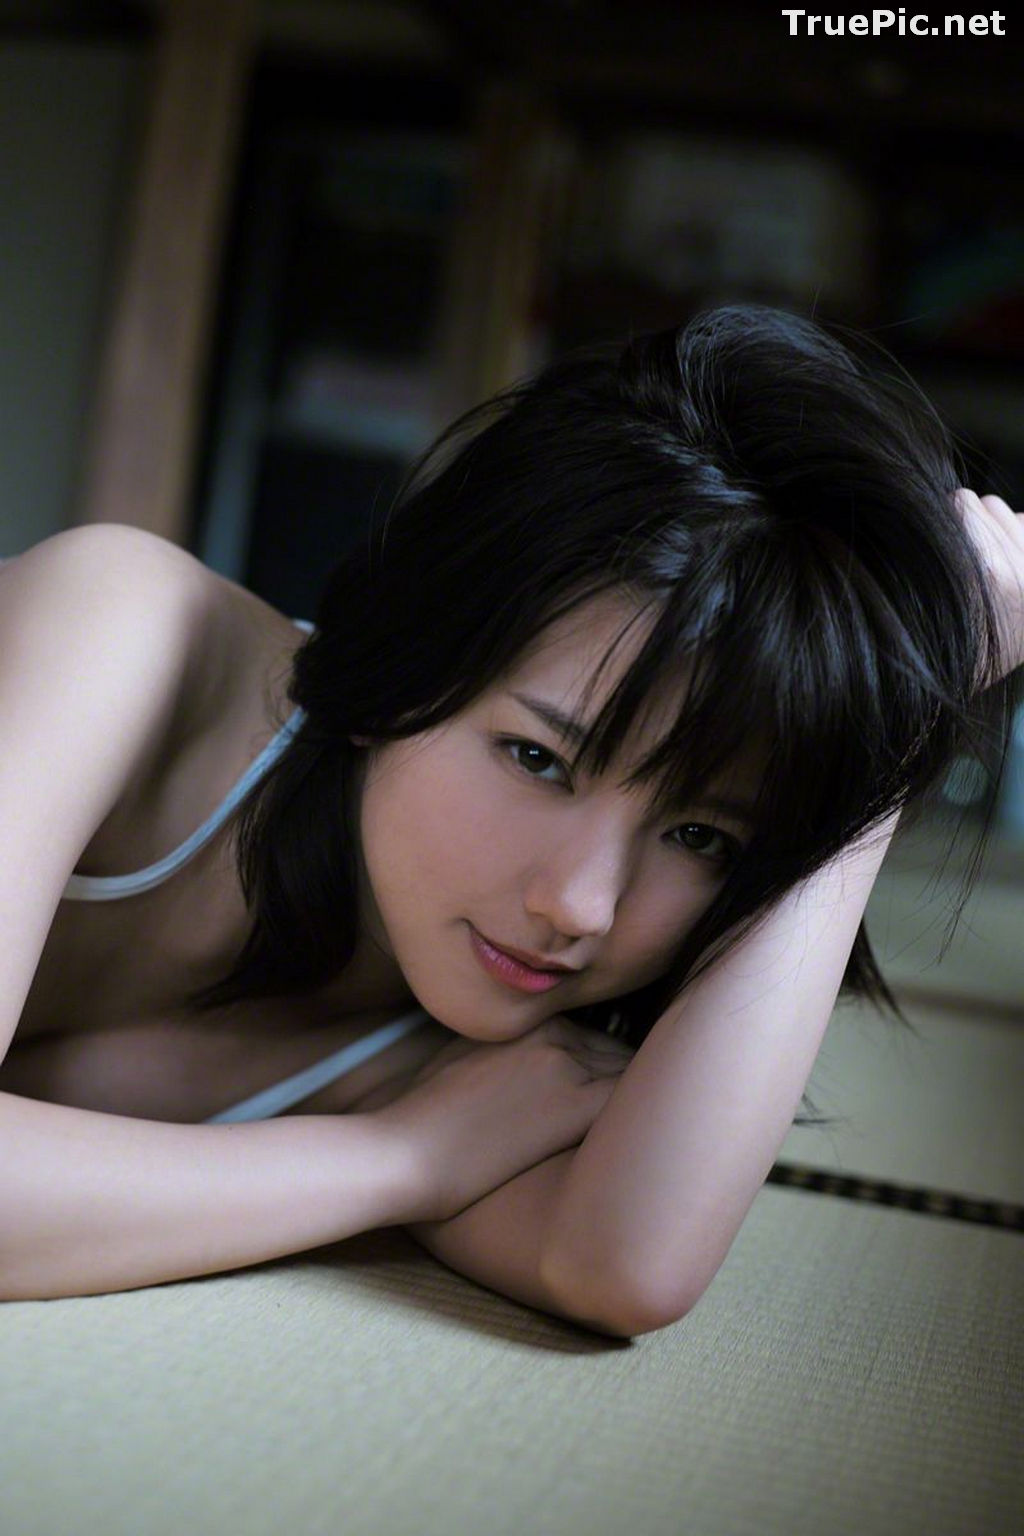 Image Wanibooks No.130 - Japanese Idol Singer and Actress - Erina Mano - TruePic.net - Picture-202